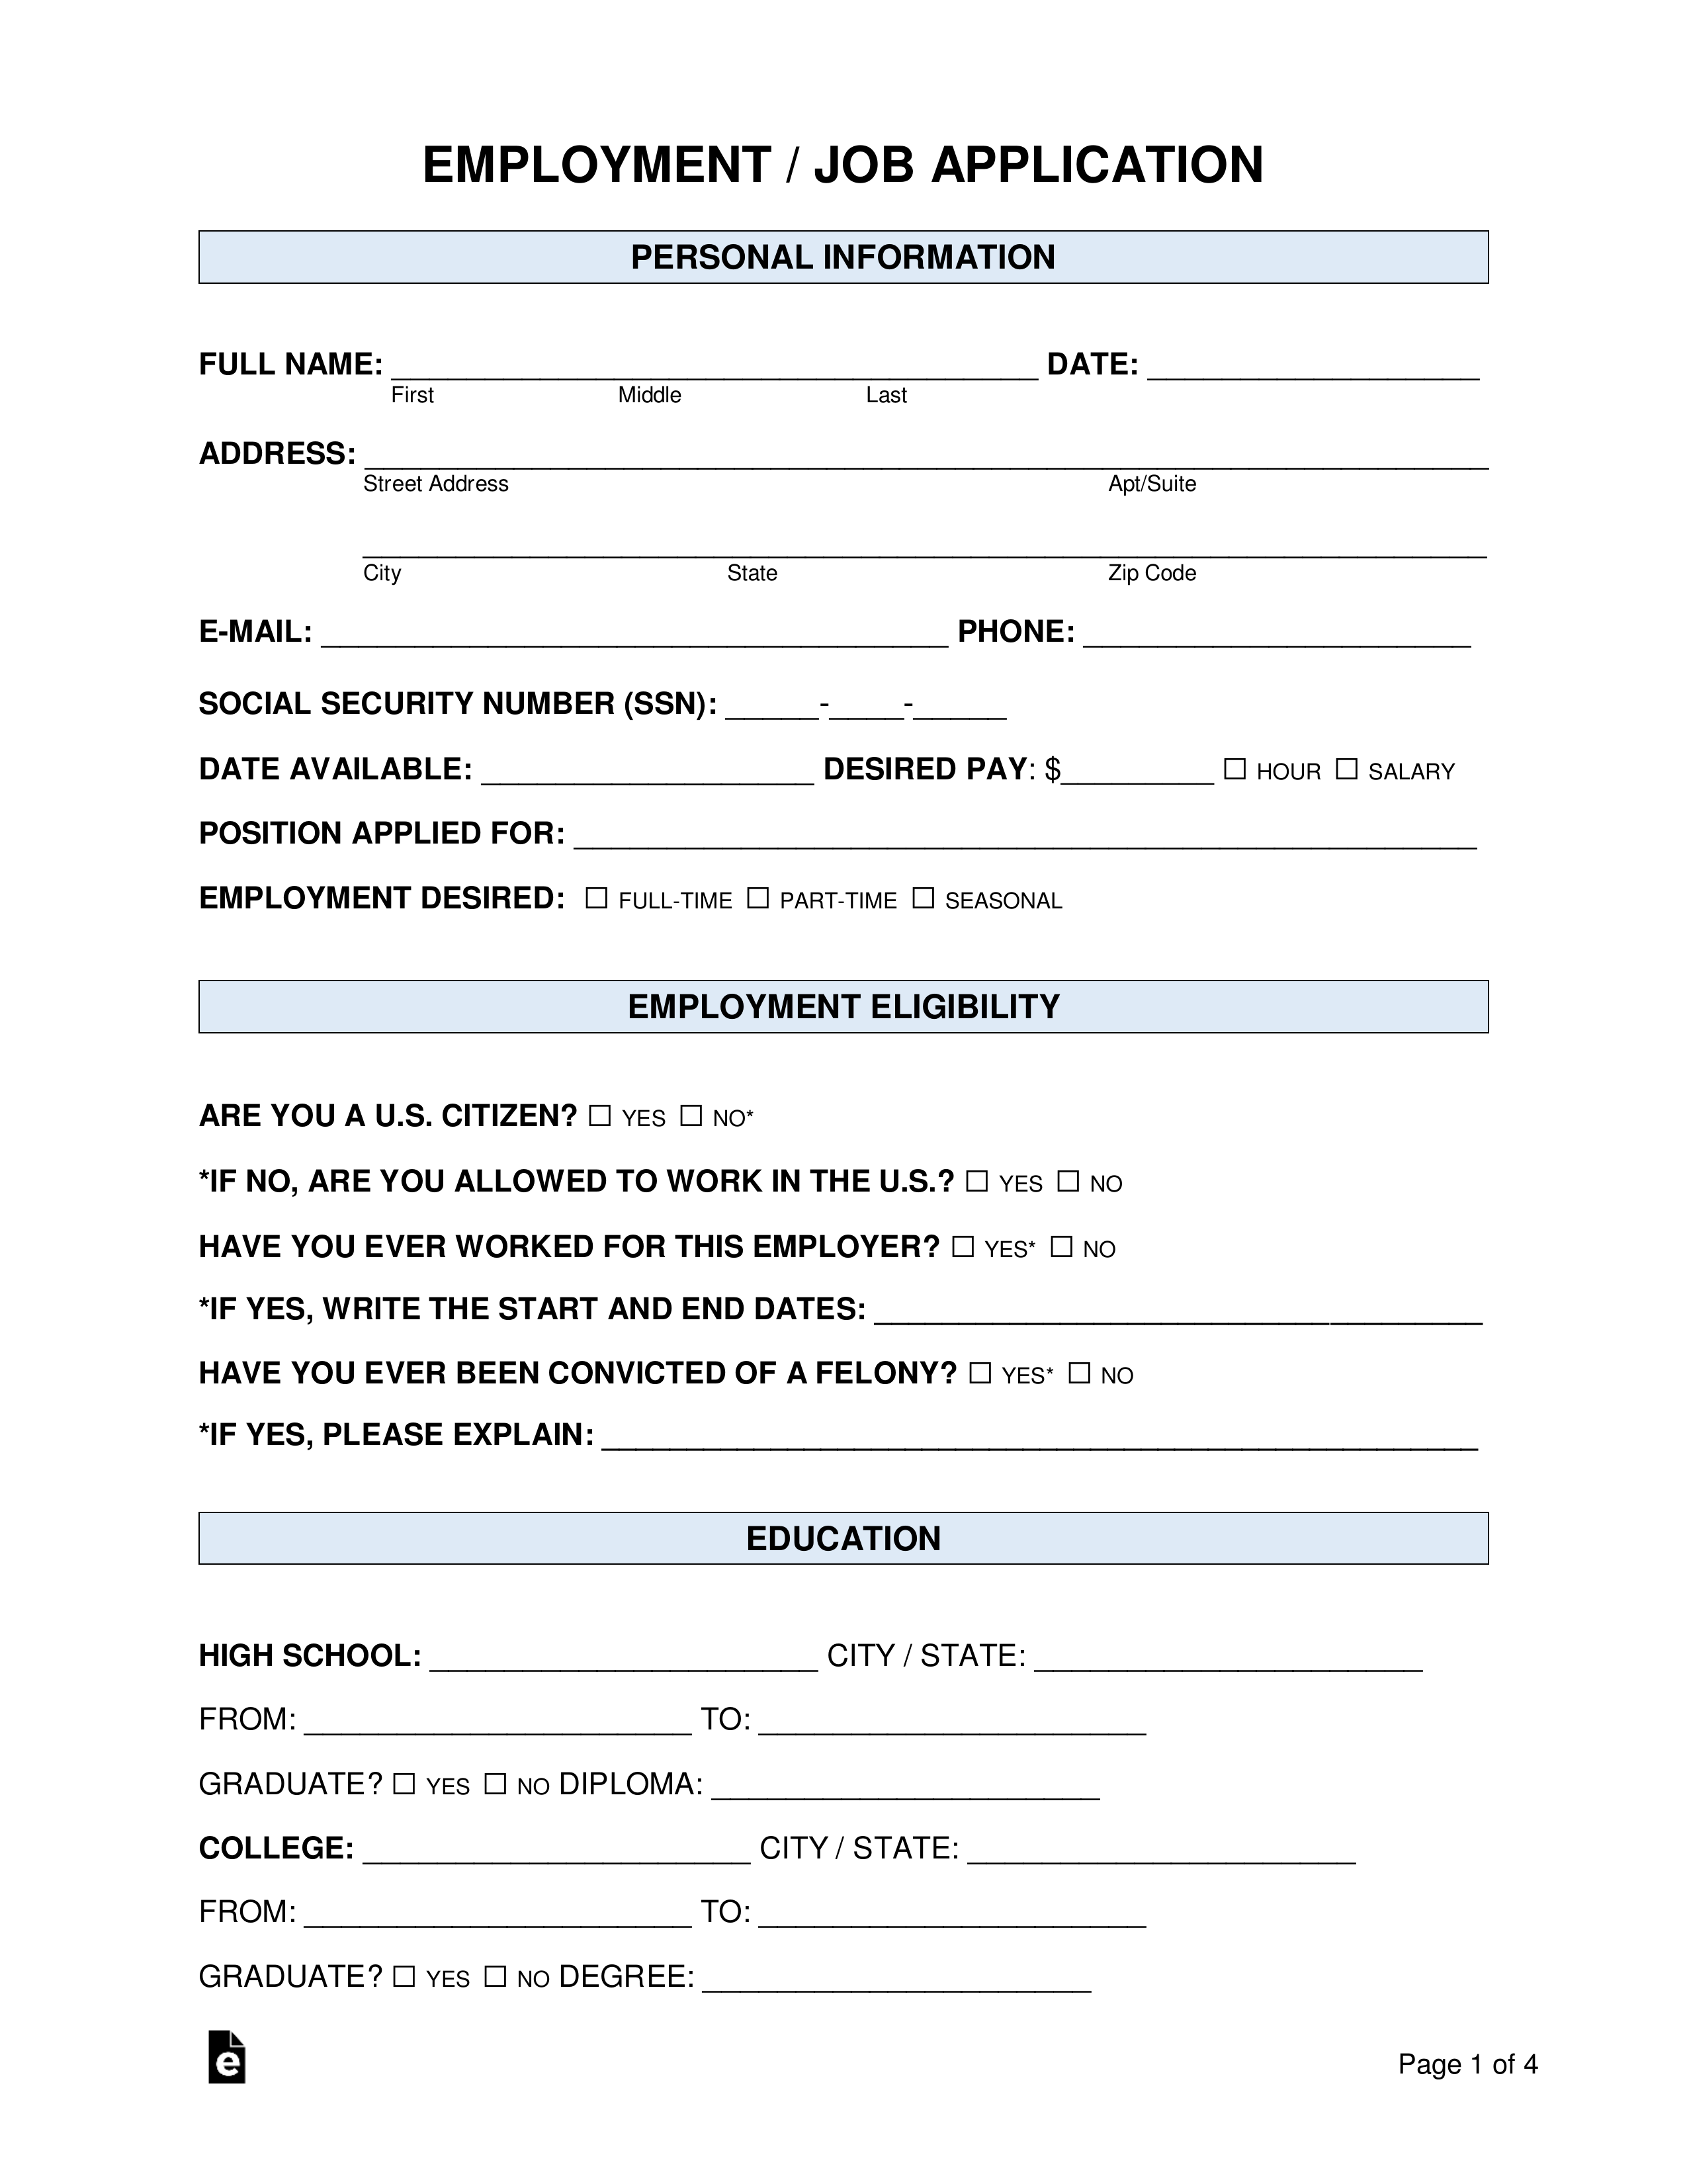 Sample job application form word document